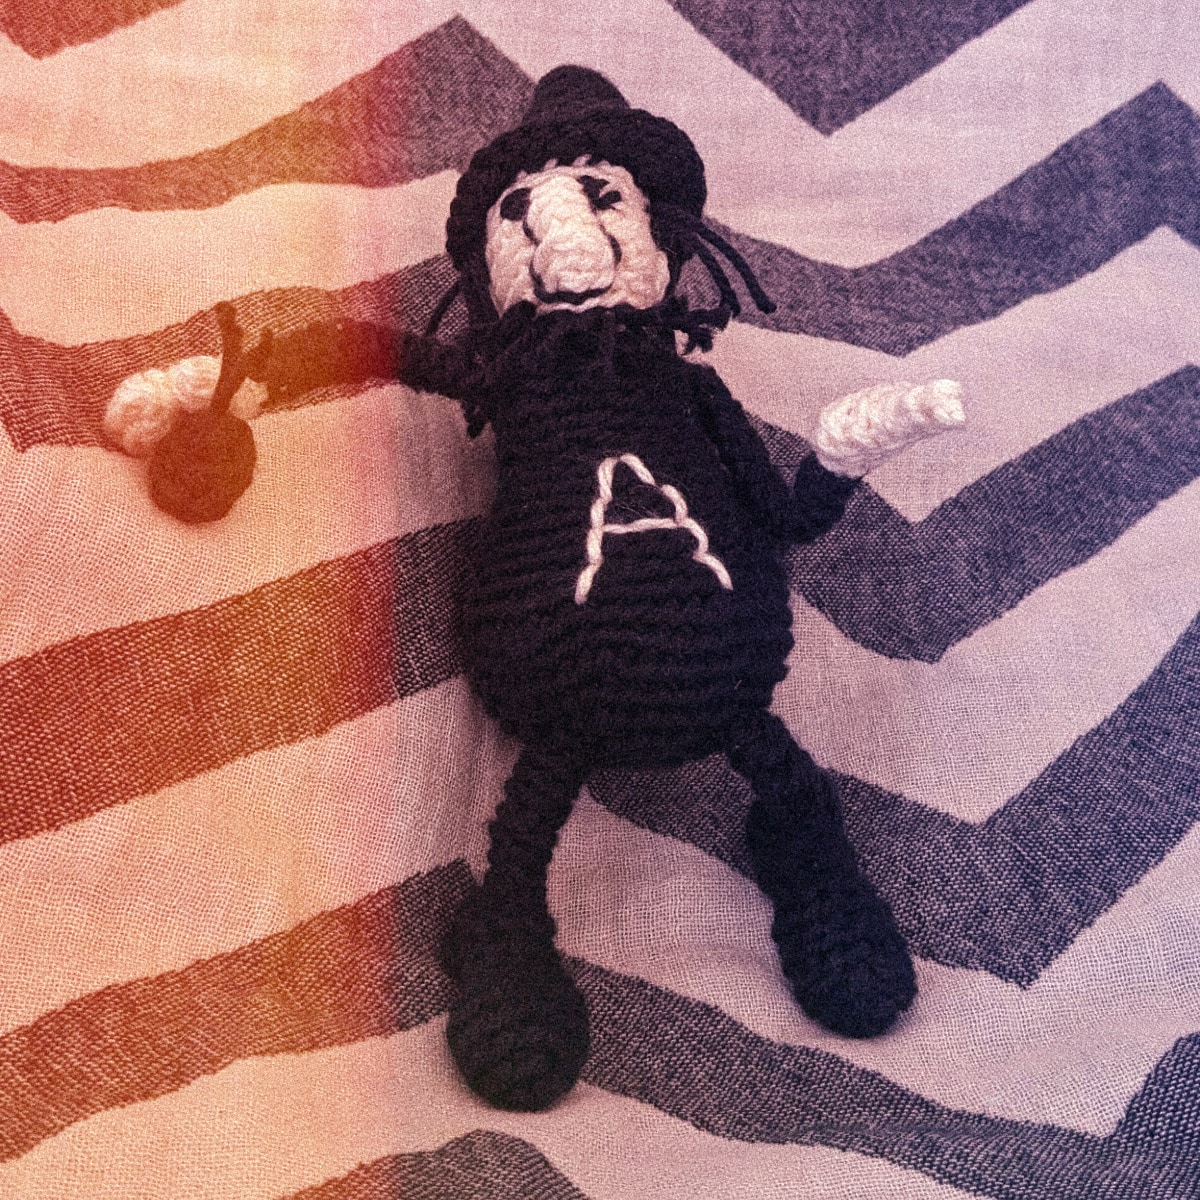 A crochet figure of Anarchik the Italian comic book character